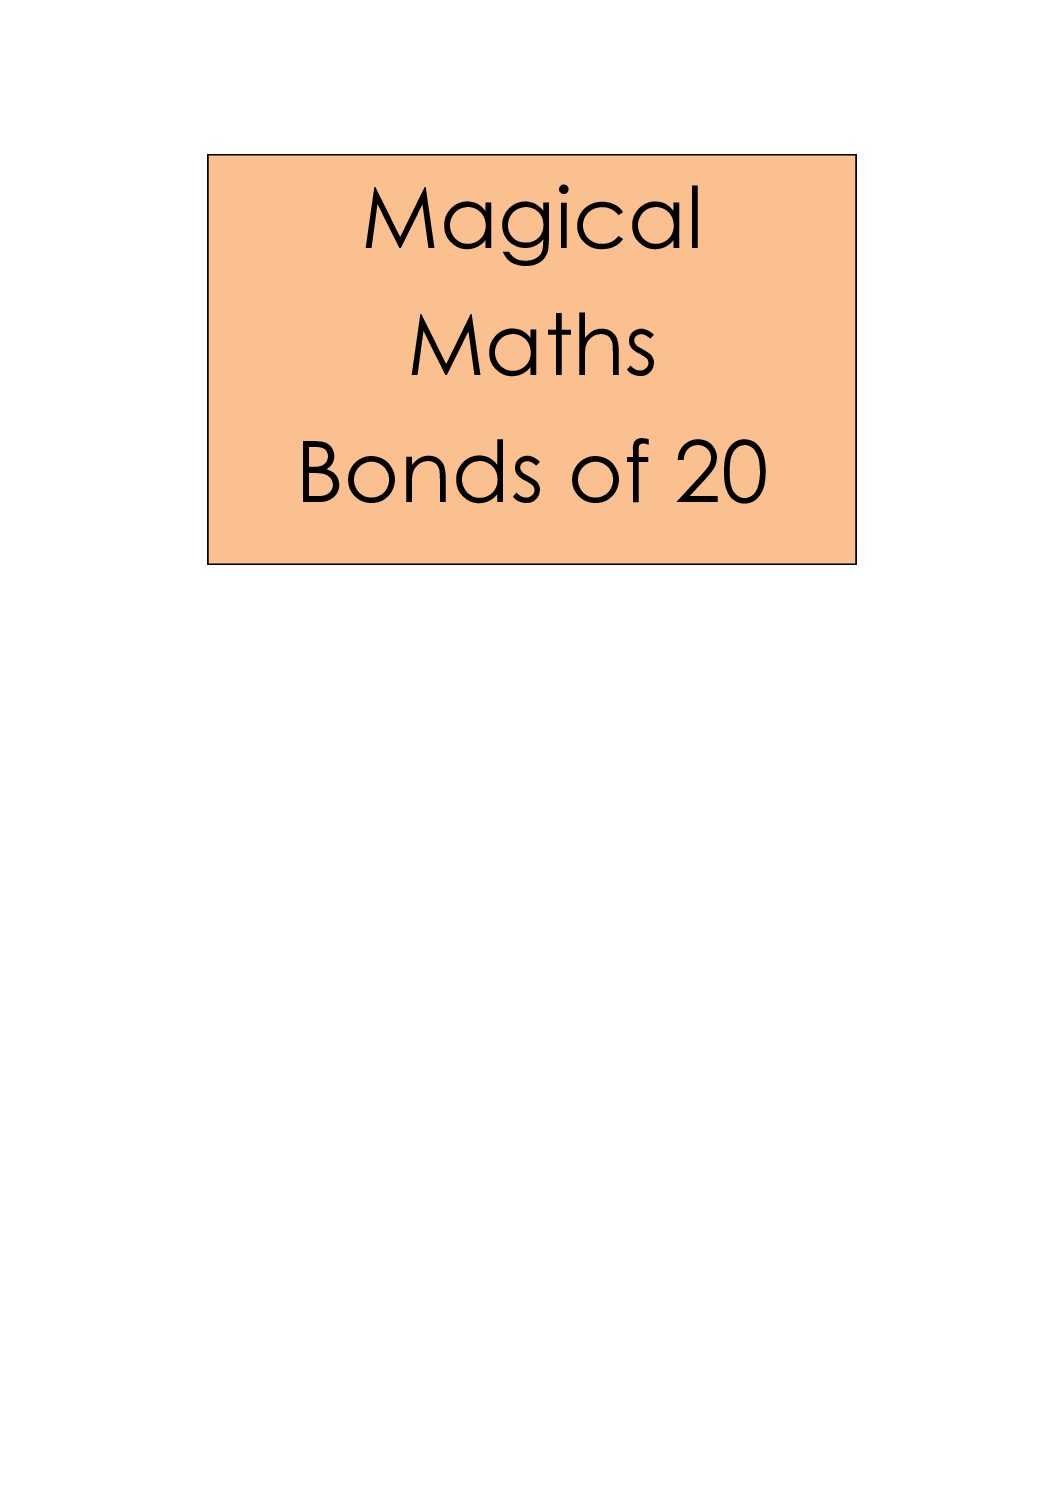 Bonds Of 20 image